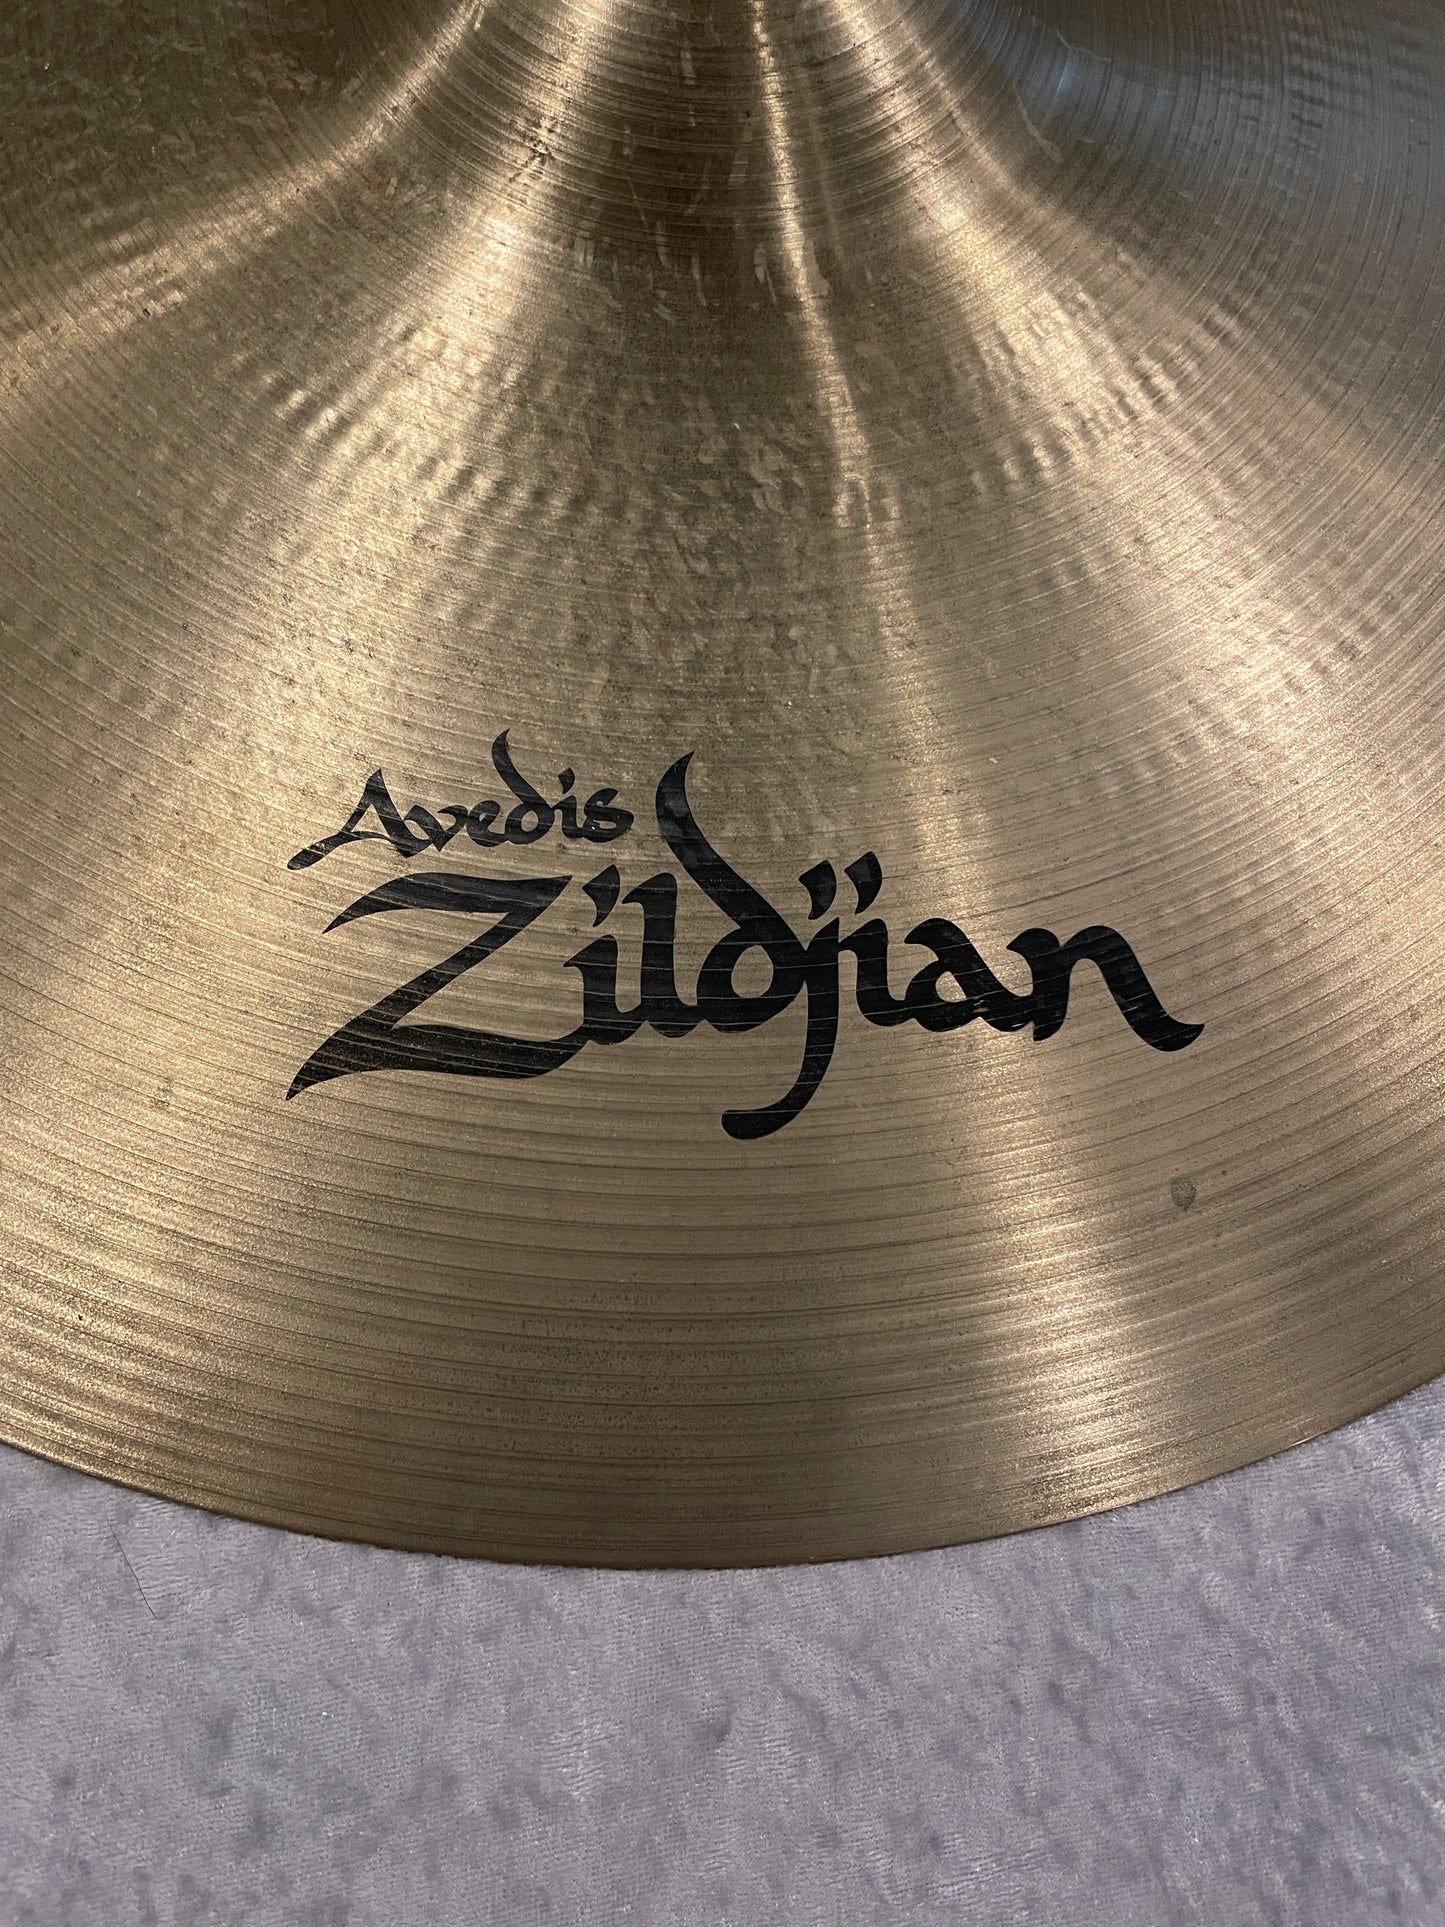 22" Zildjian A Medium Ride Cymbal 3178g #772